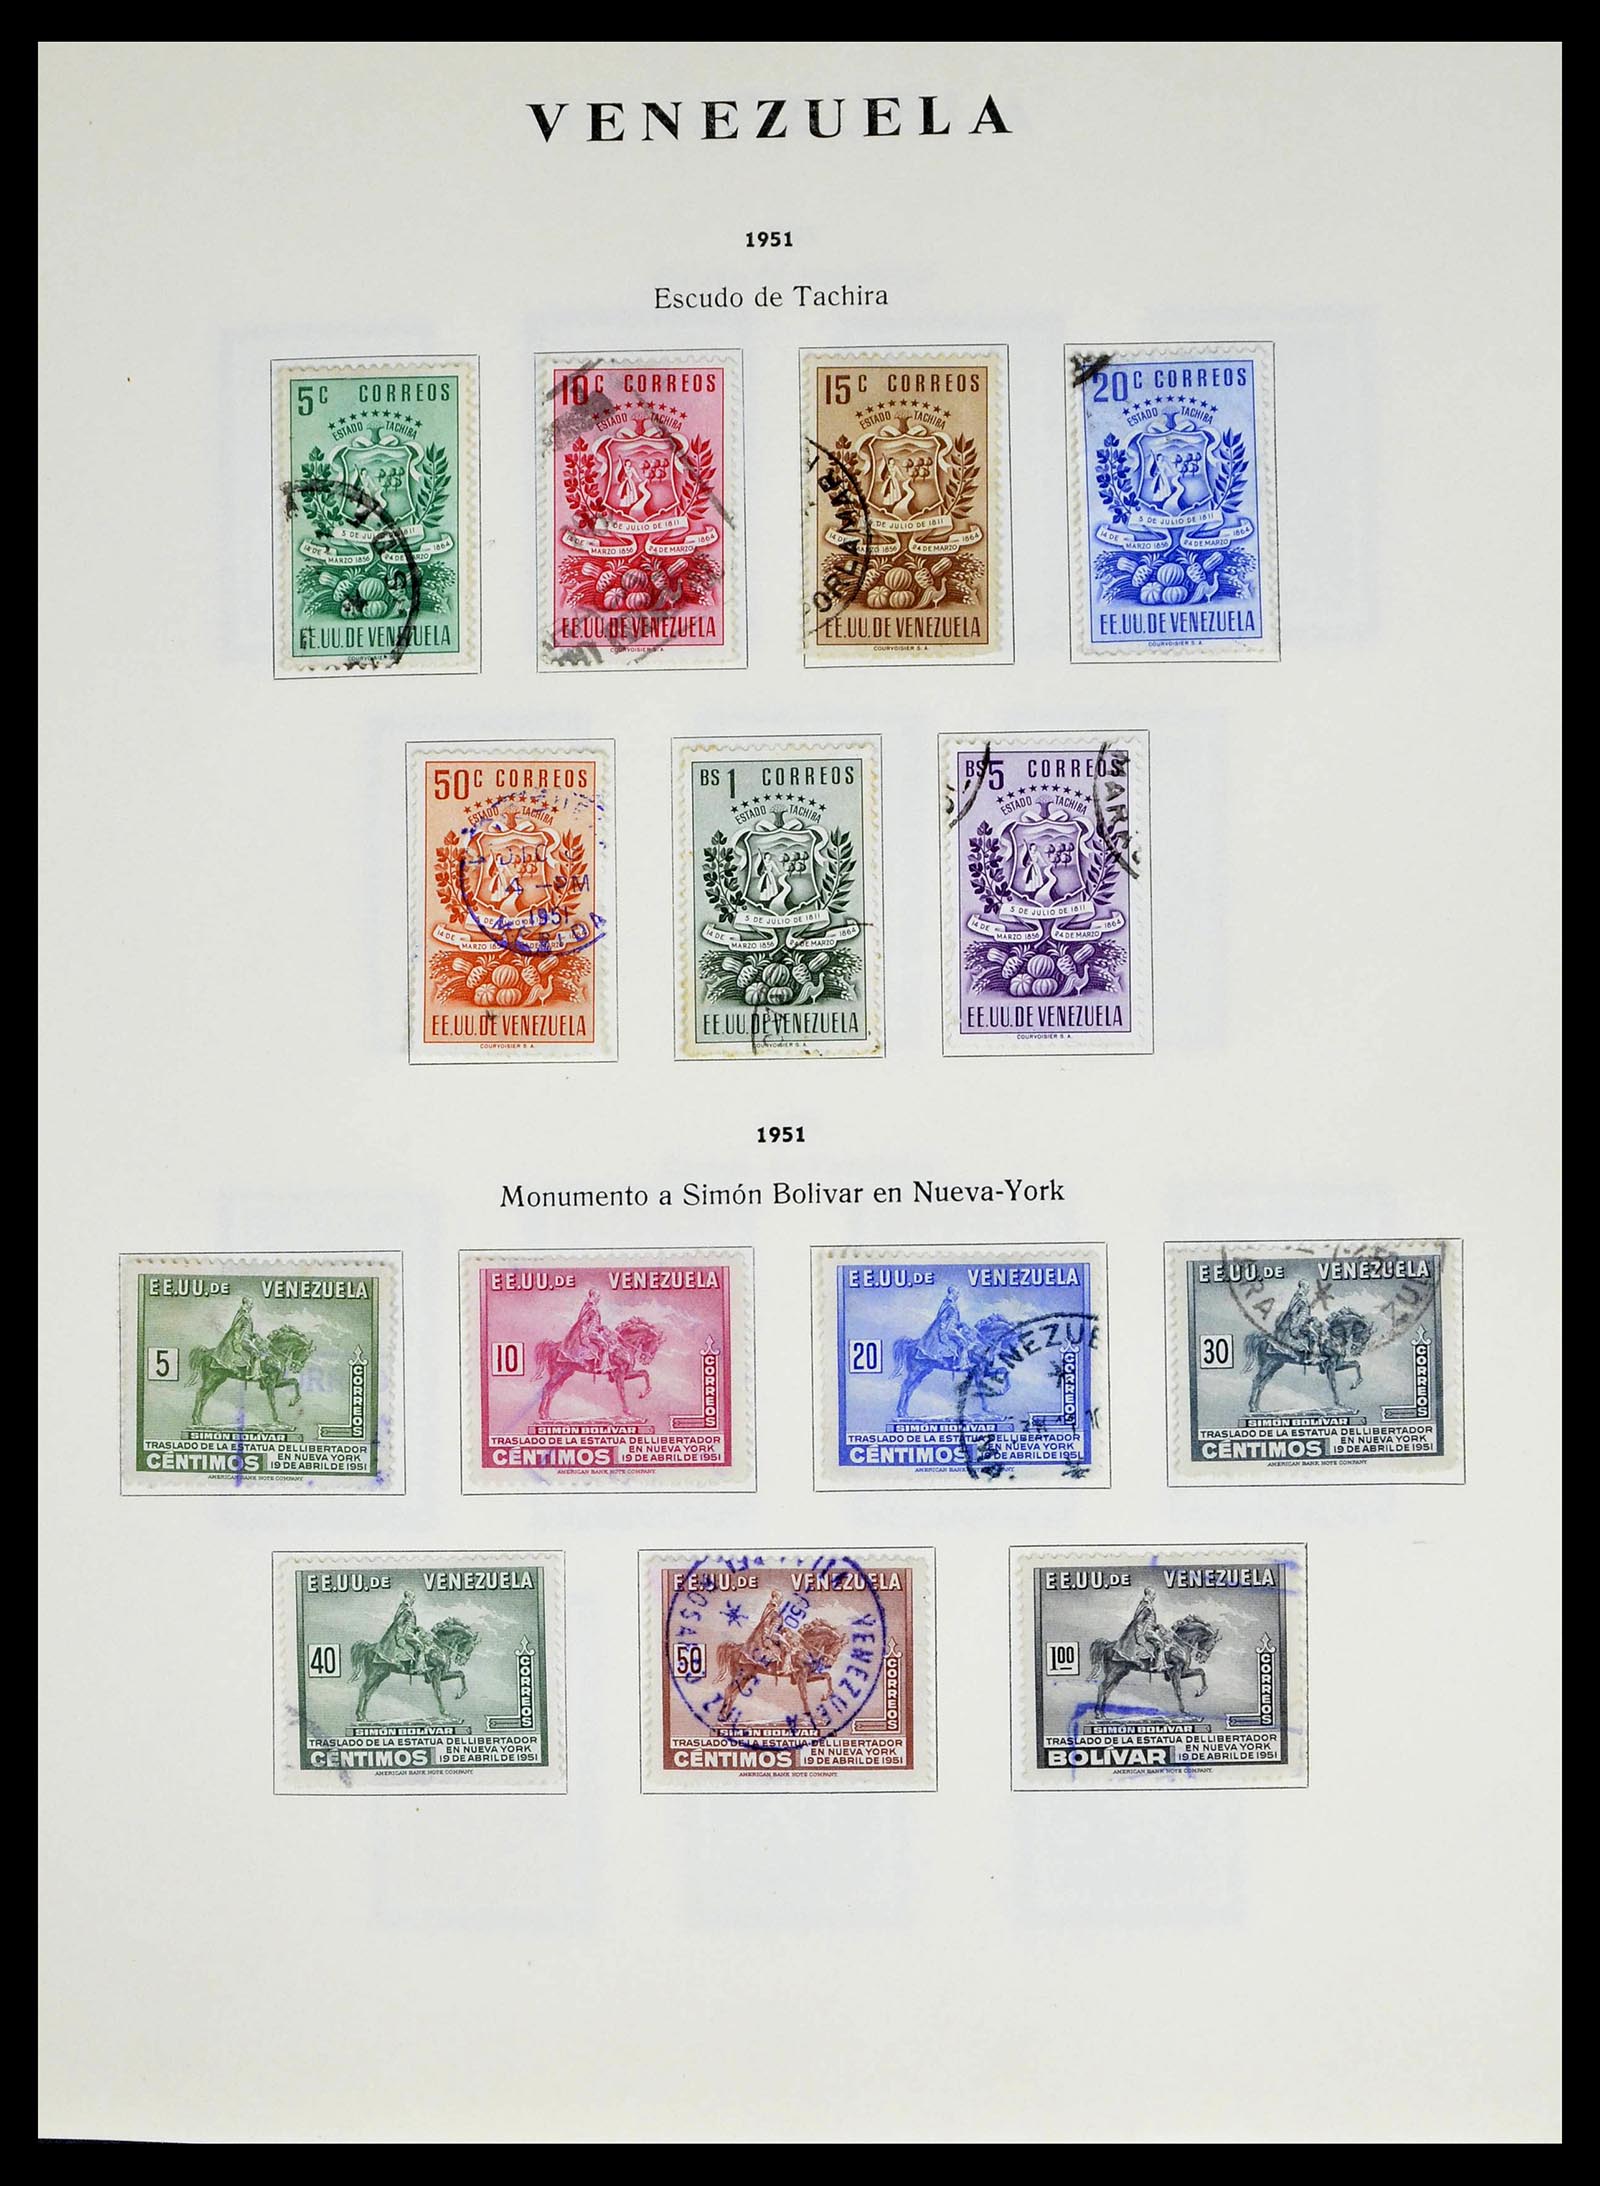 39223 0023 - Stamp collection 39223 Venezuela 1859-1984.